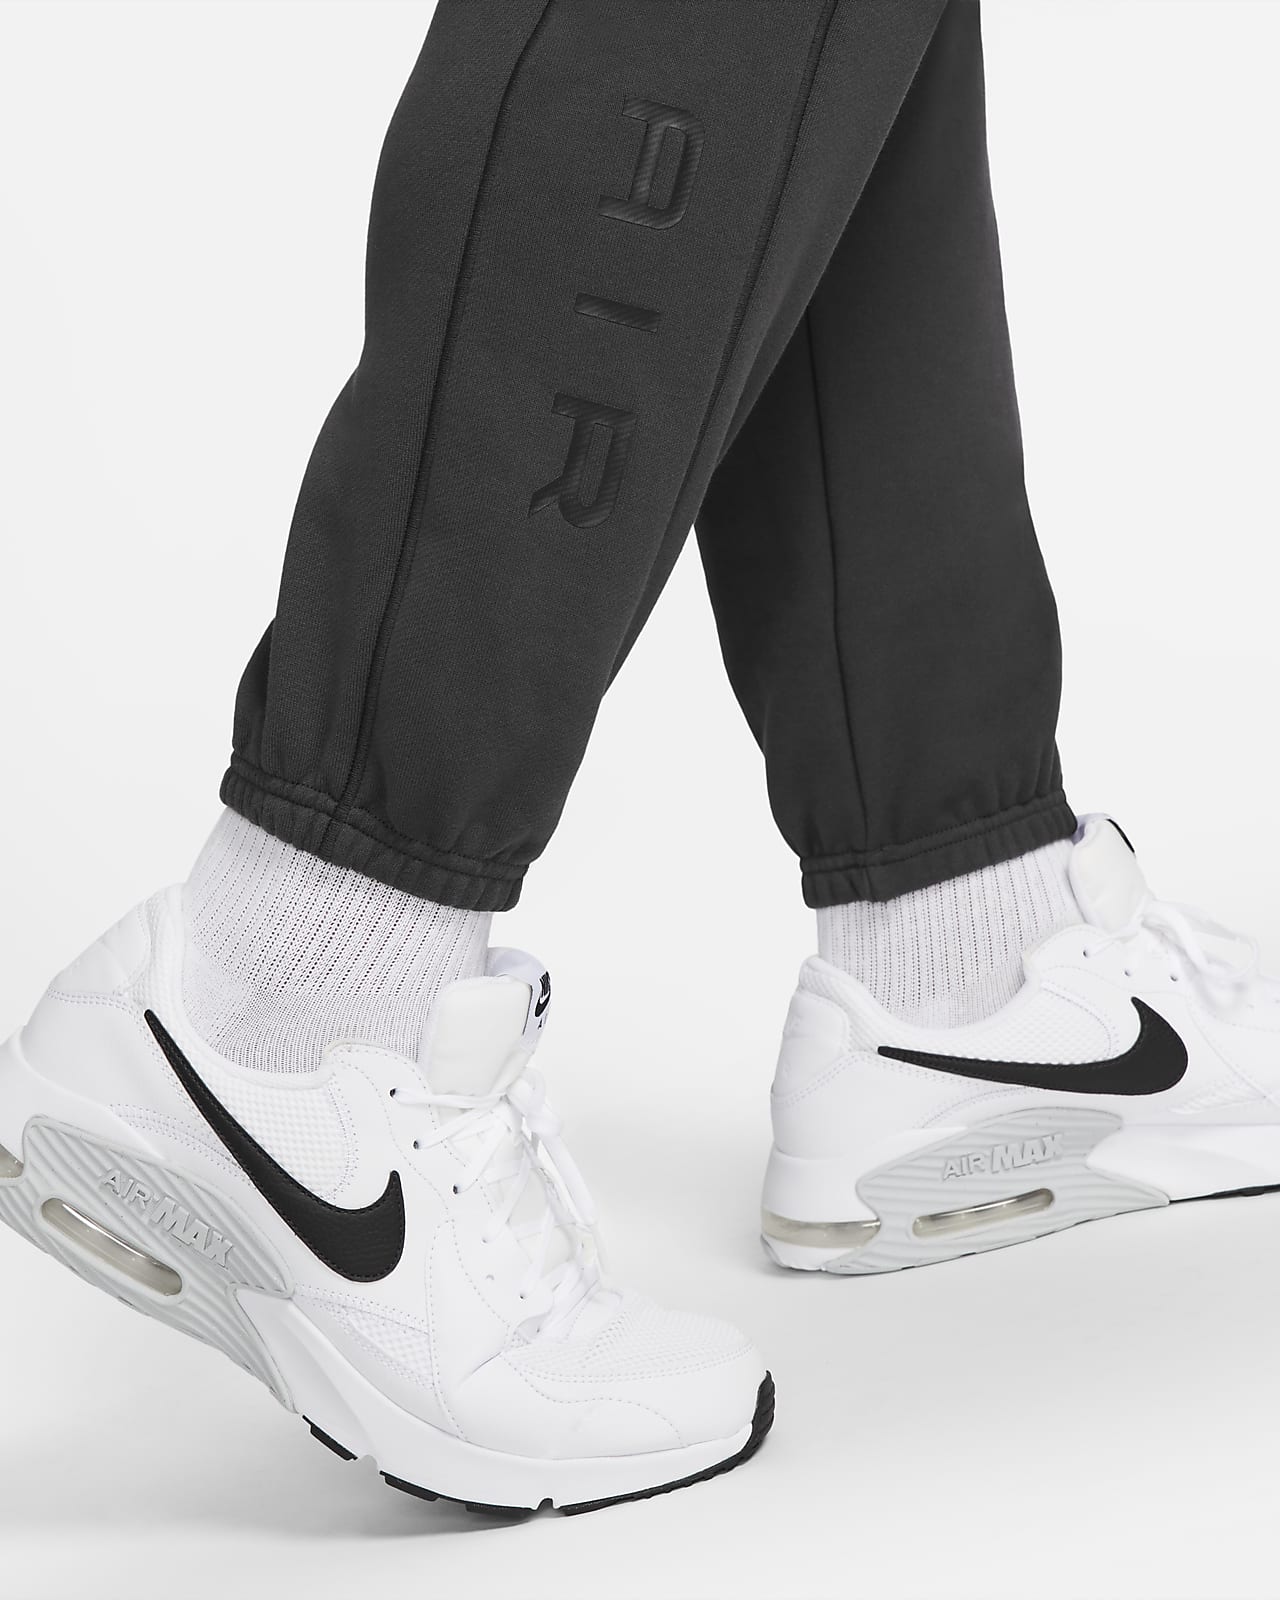 Nike Sportswear Air Men's French Terry Pants.